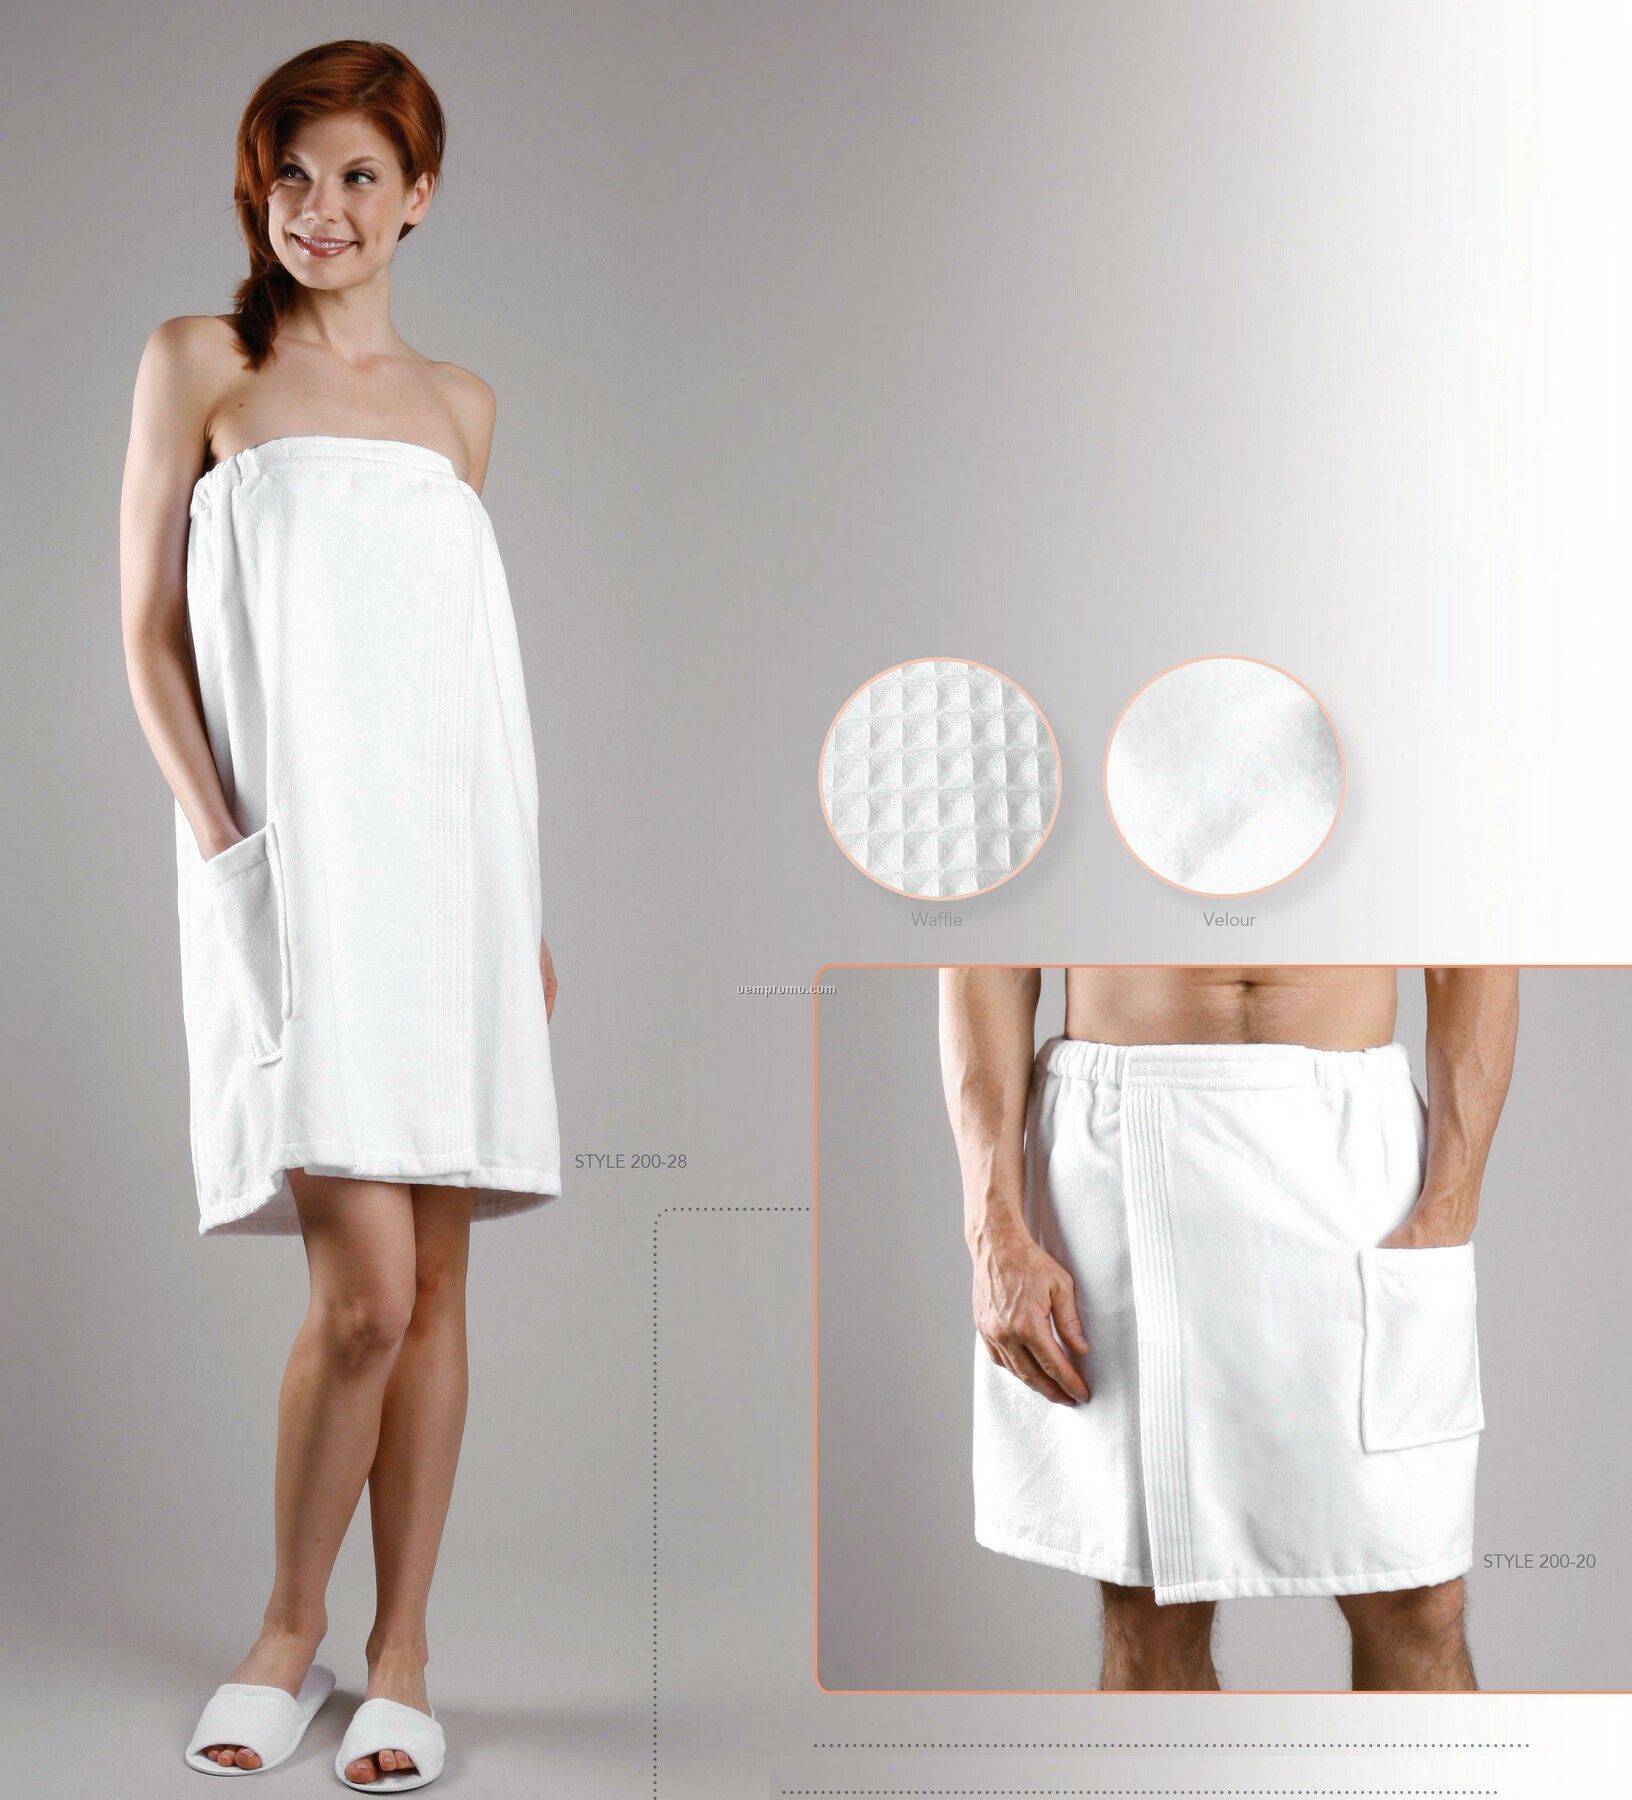 Light Colors Long Velour Body Wrap Towel With Velcro Closure